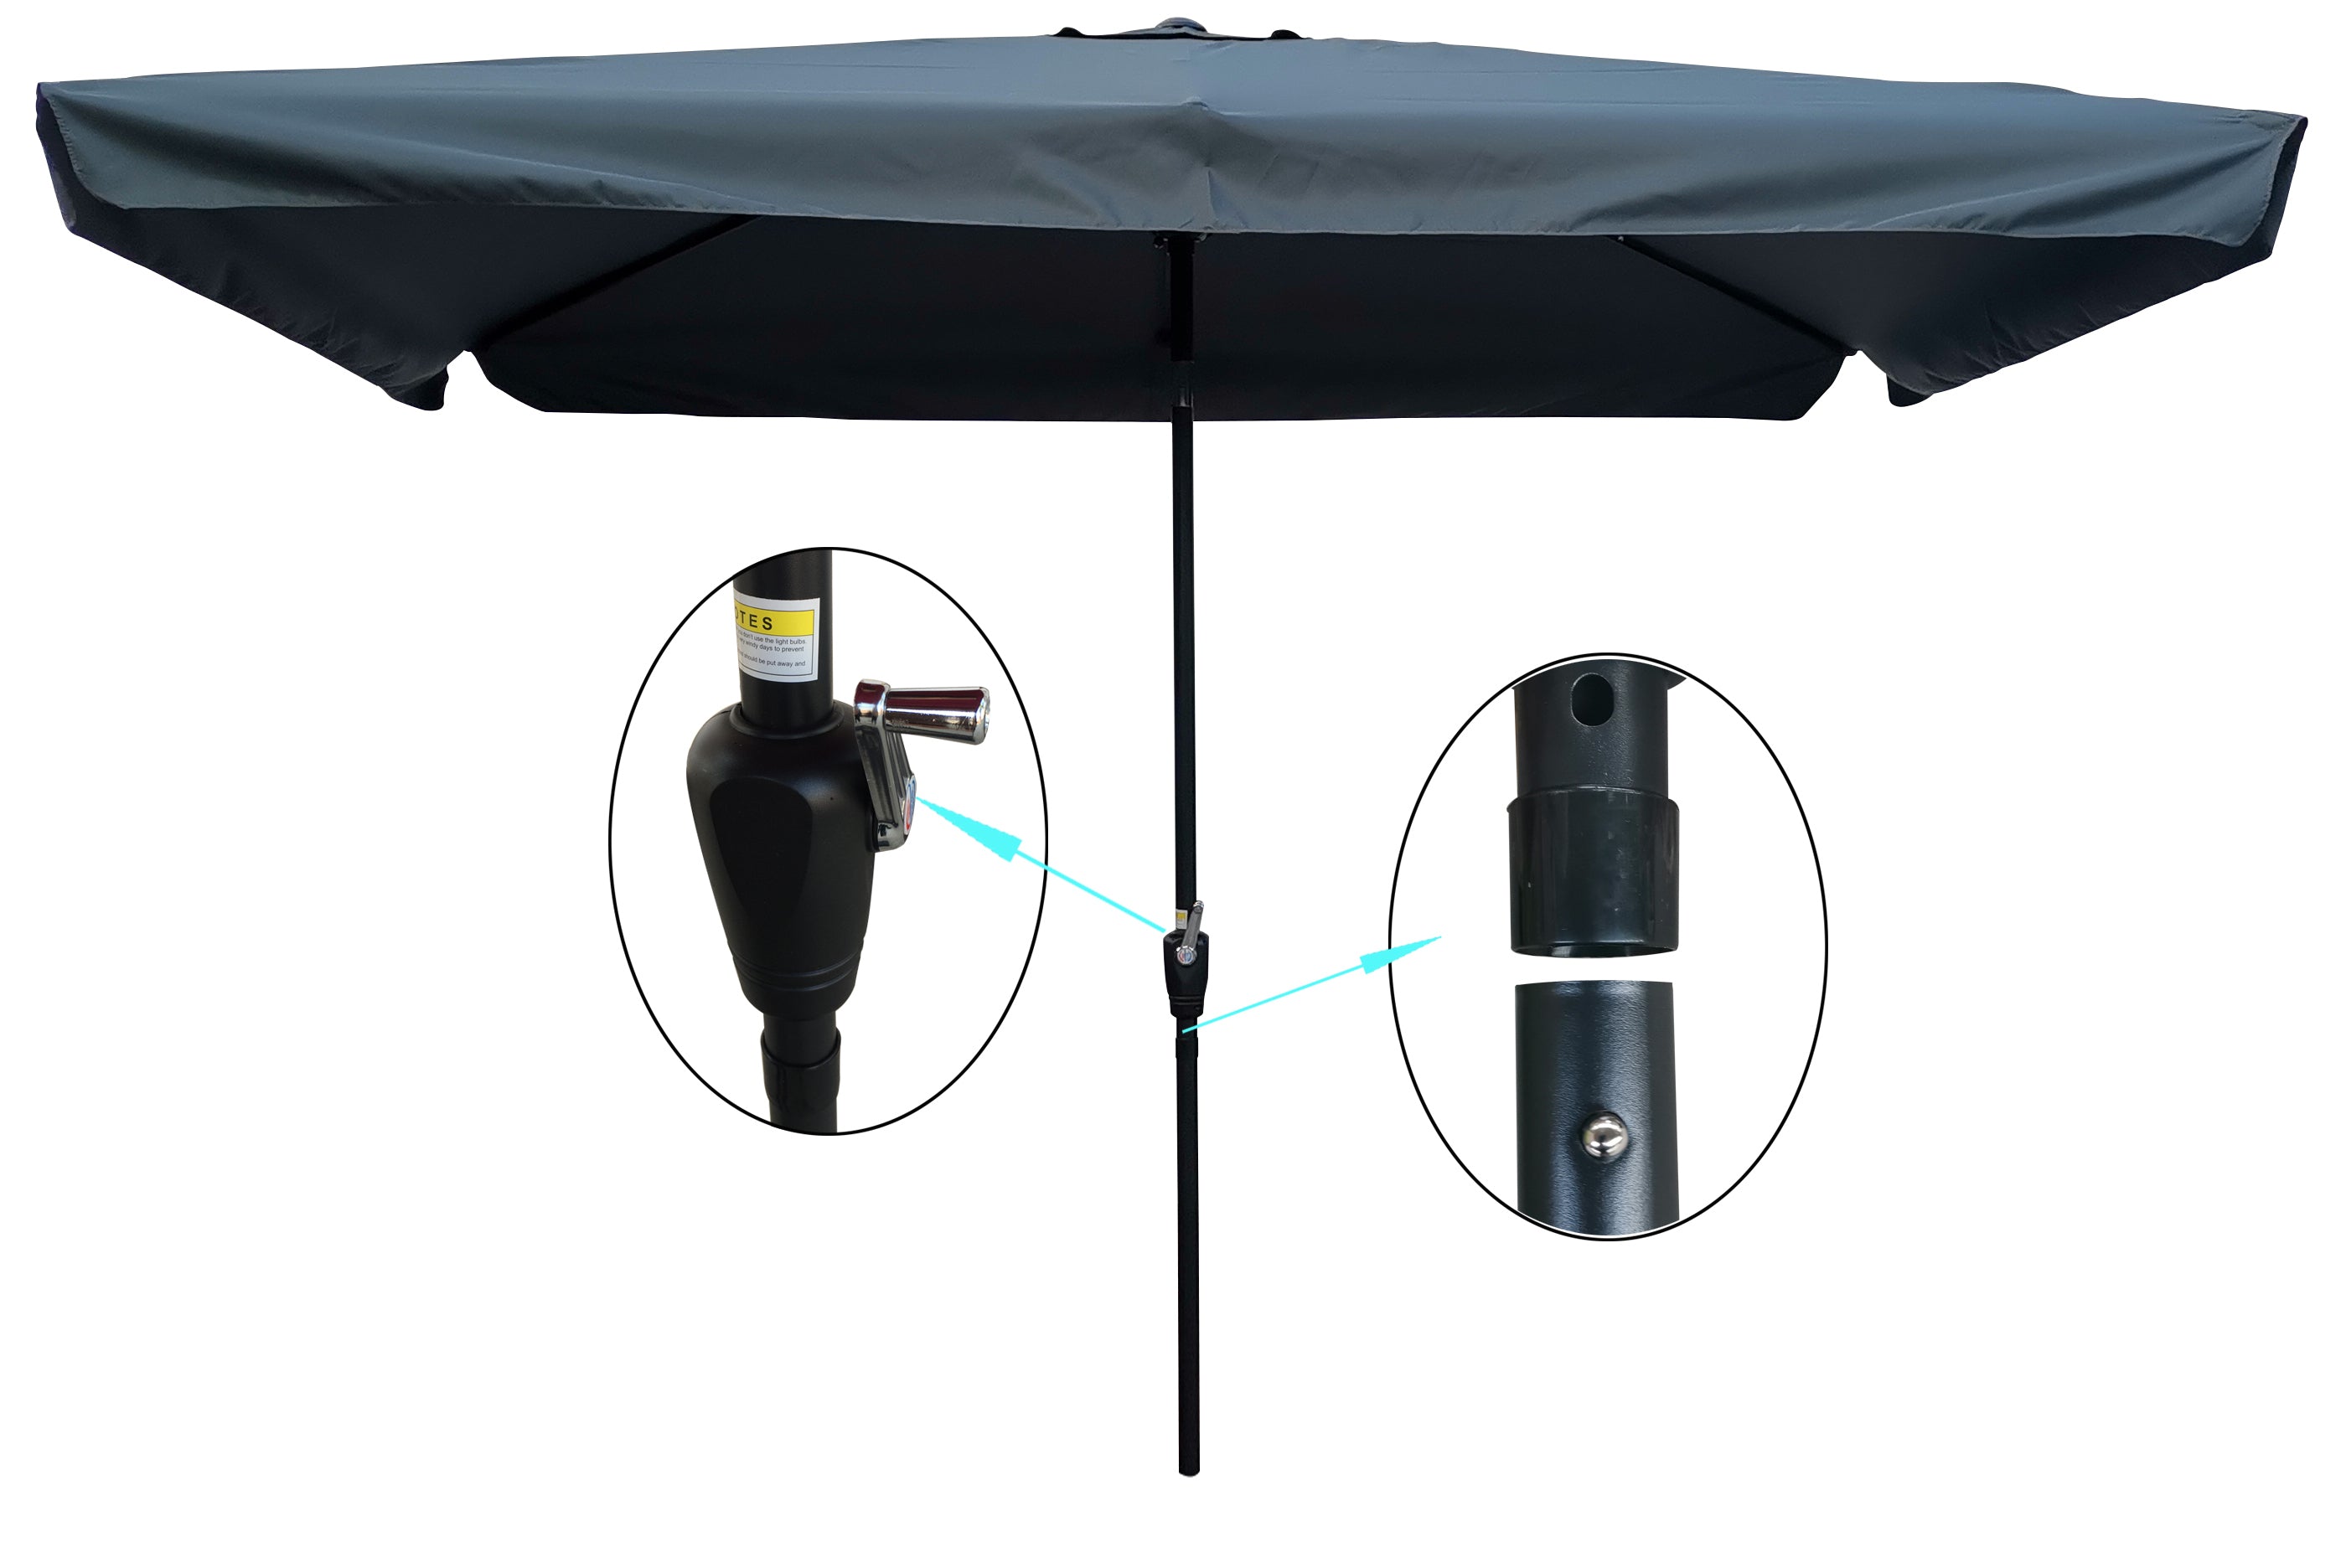 10-x-6.5t-Rectangular--Solar-LED-Lighted-Outdoor-Waterproof-Umbrellas-Sunshade-with-Crank-and-Push-Button-Tilt-